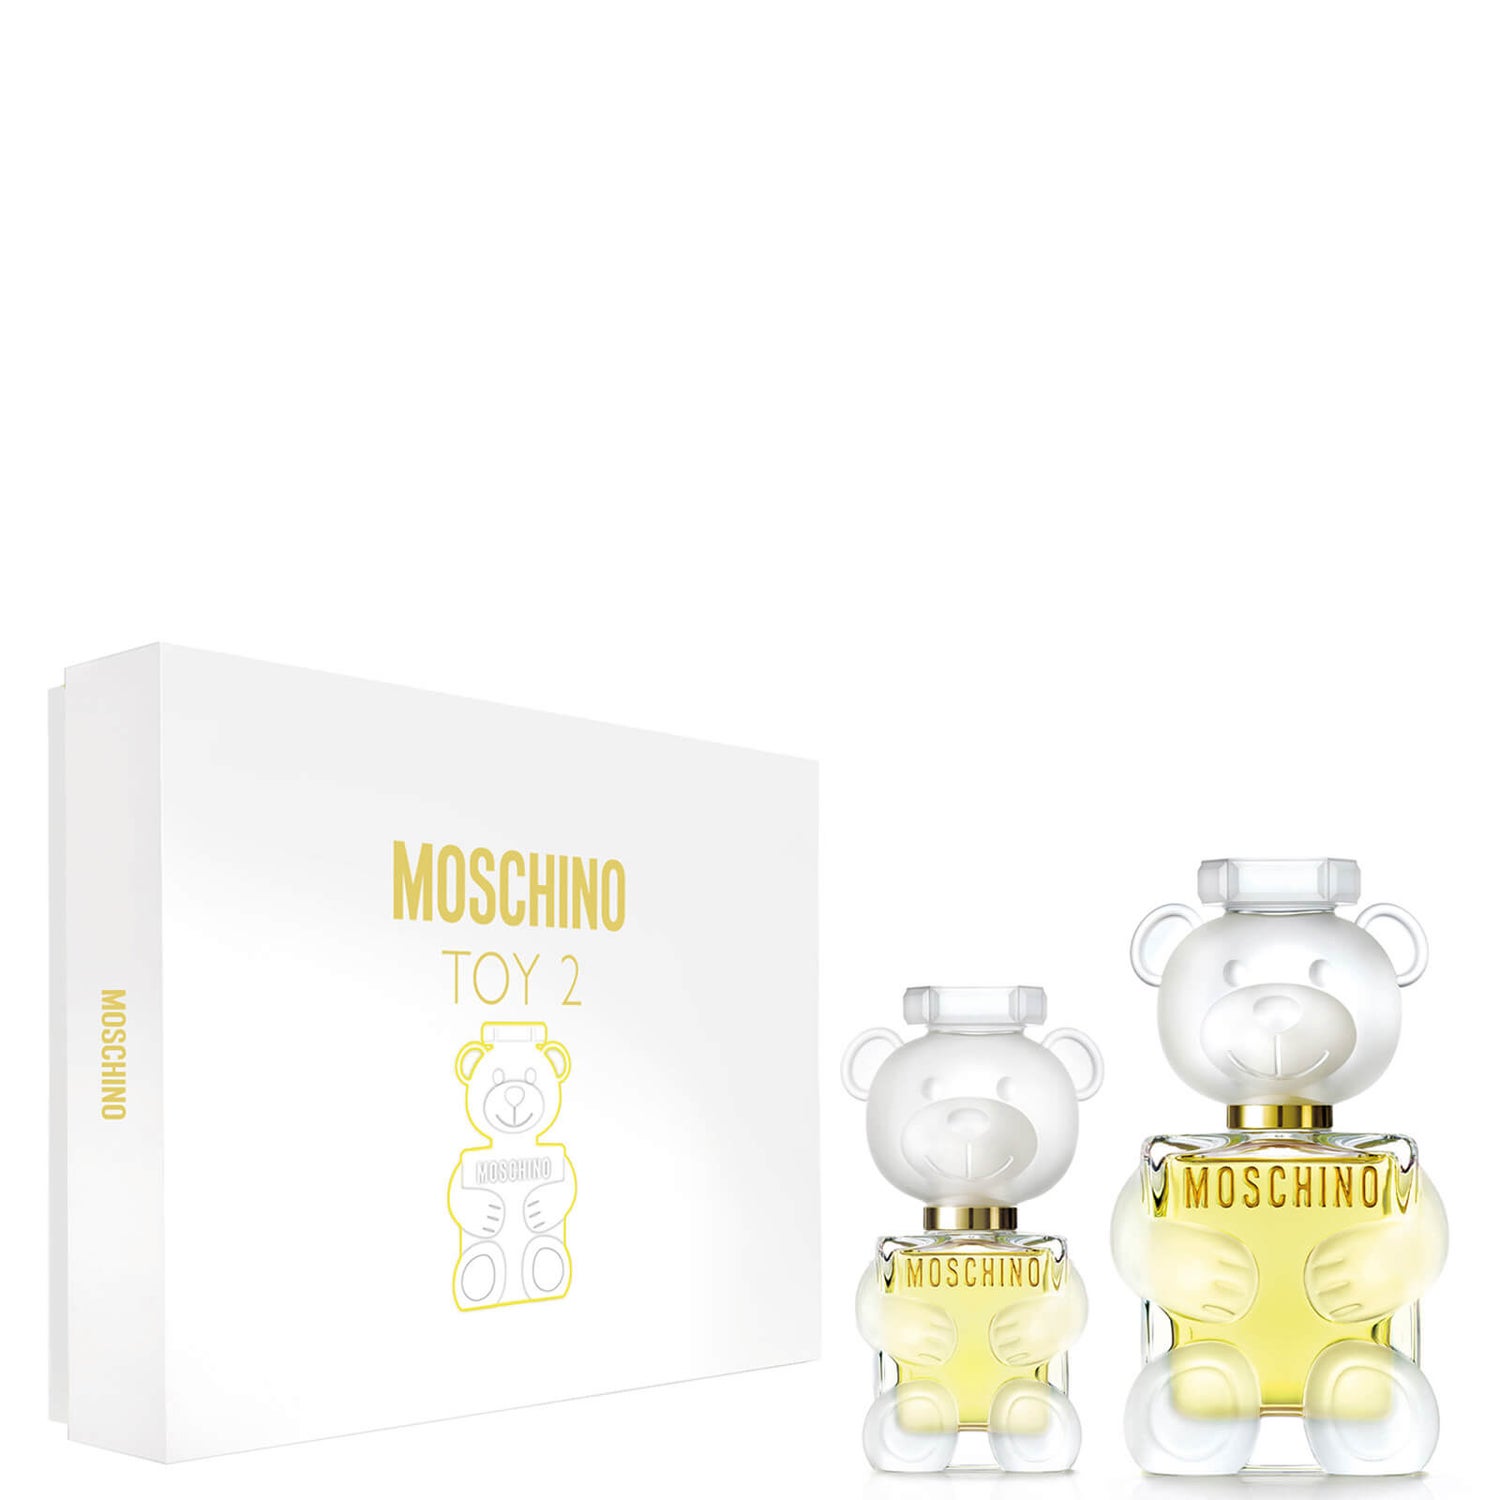 Moschino Toy 2 X20 Eau de Parfum 100ml Set - Gratis Lieferservice weltweit